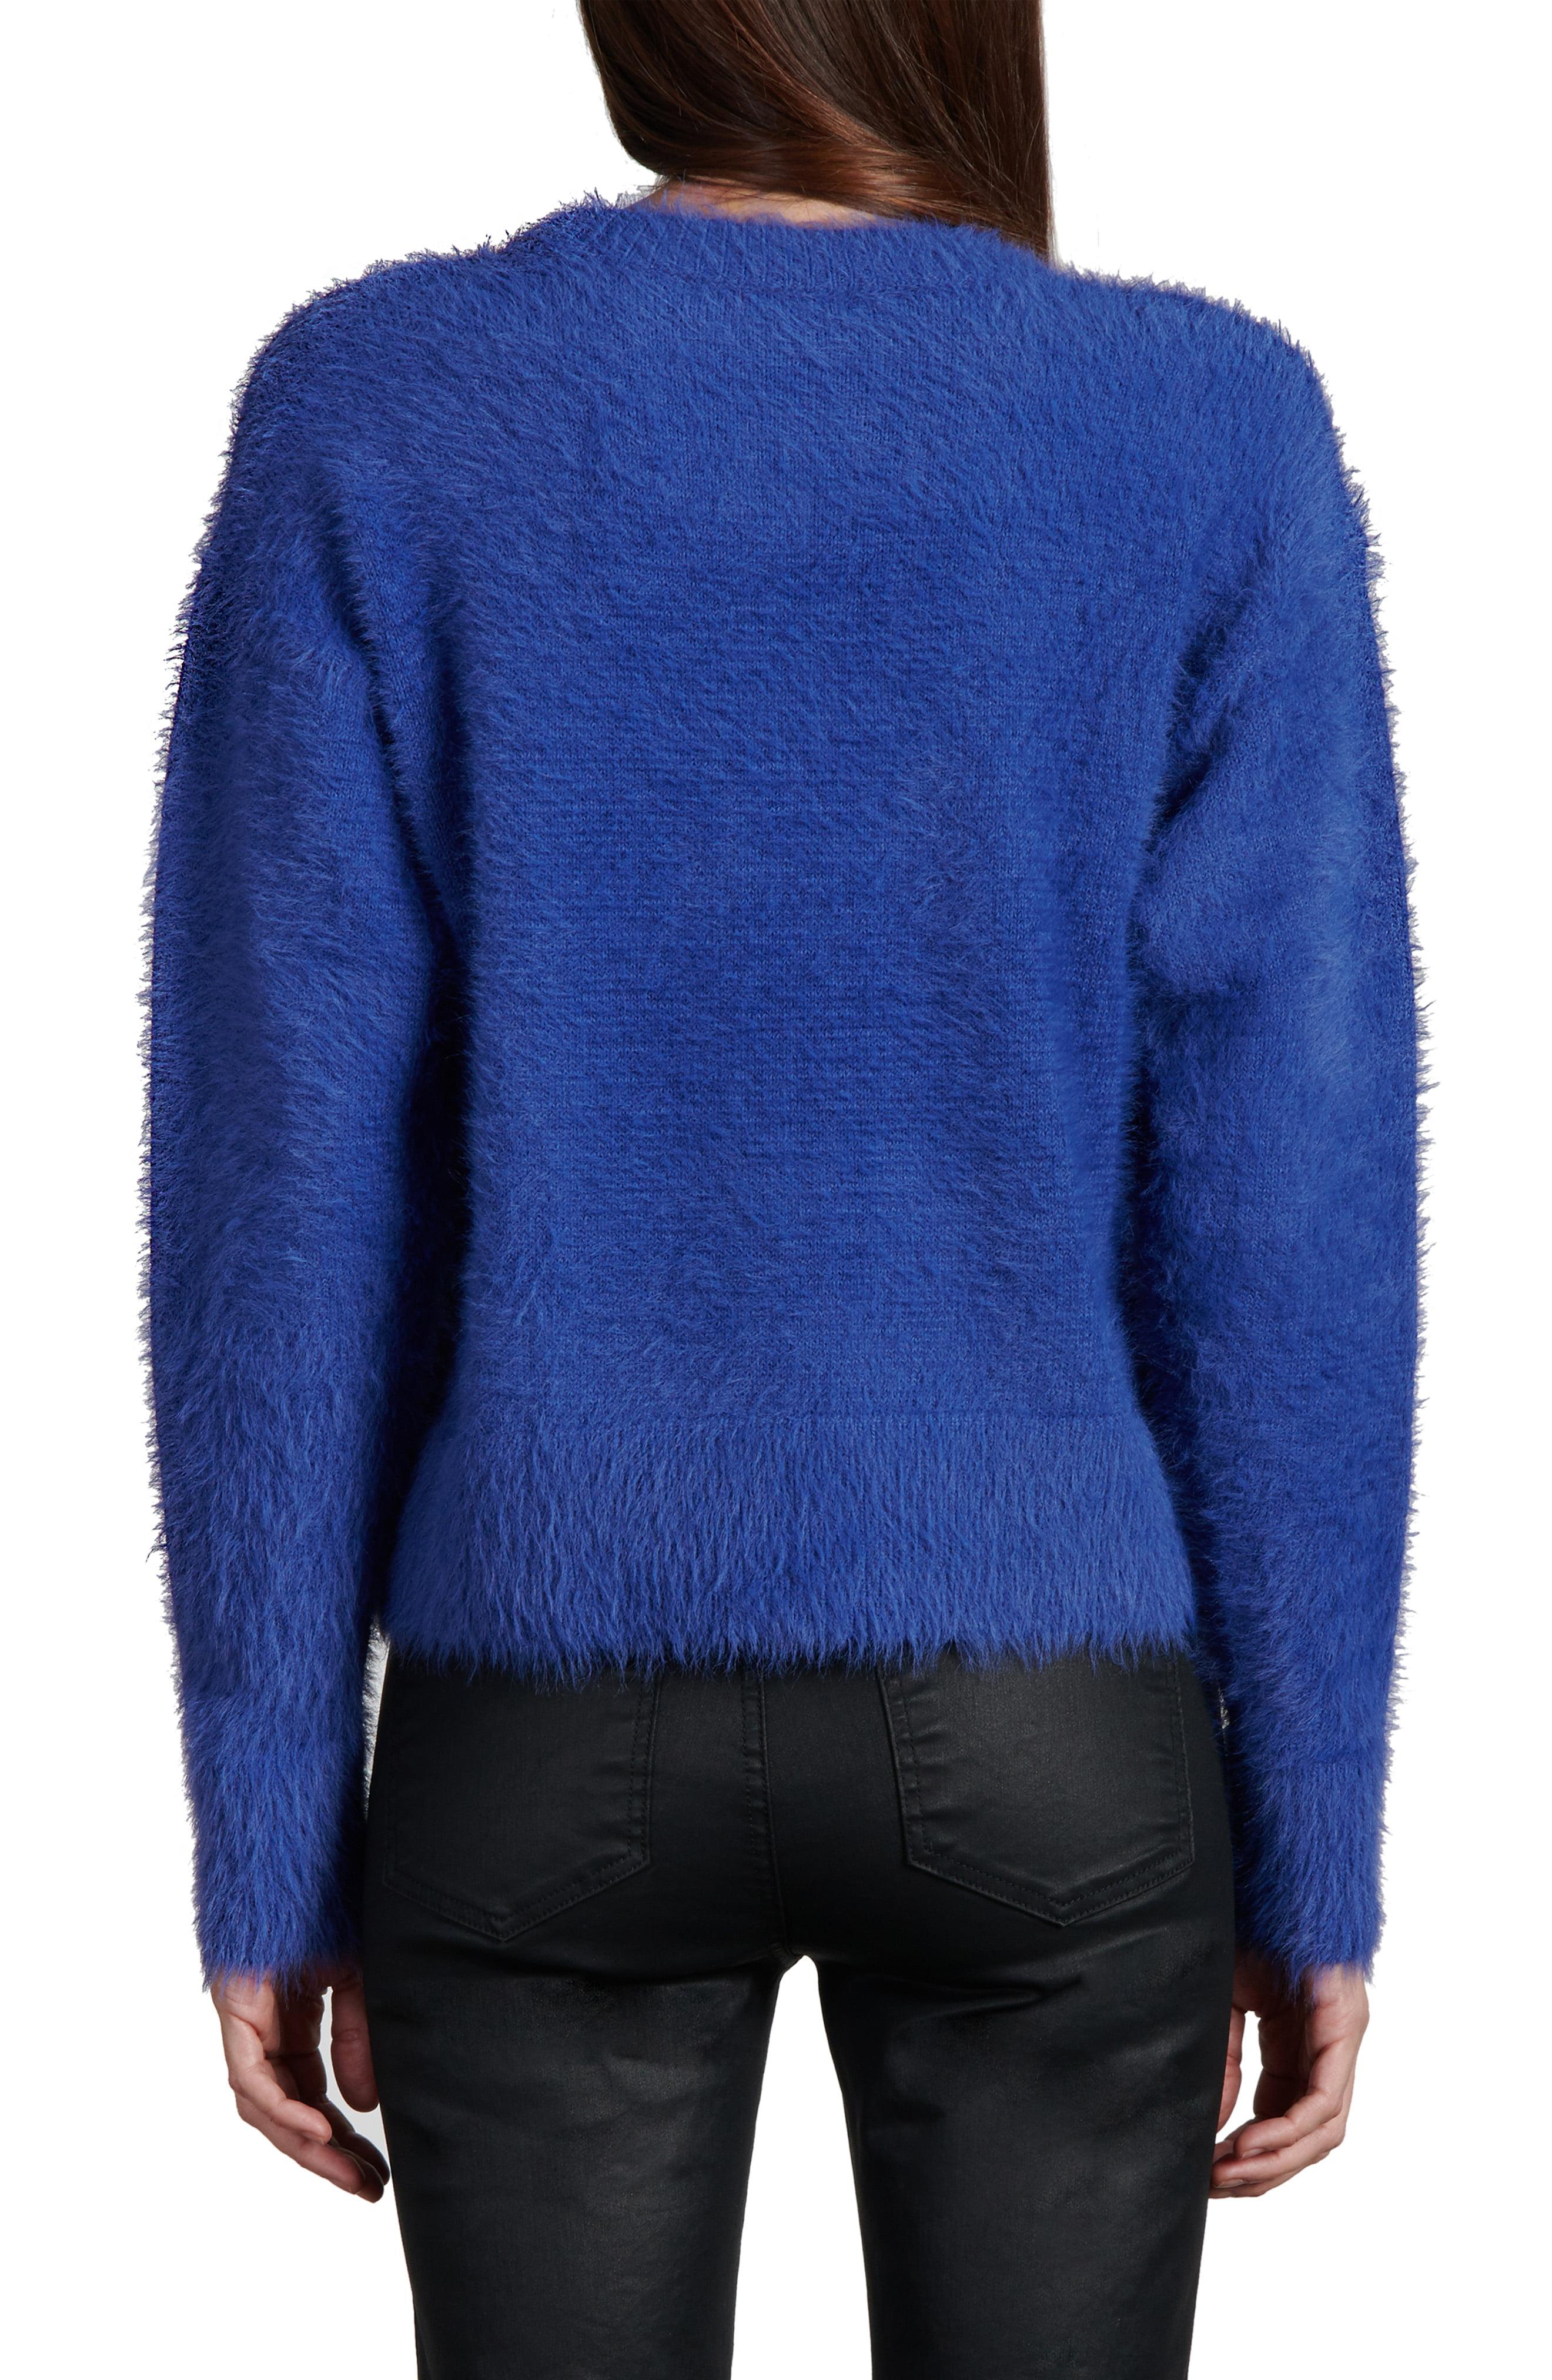 Sanctuary Fuzzy Crewneck Sweater in Blue Sapphire (Blue) - Lyst